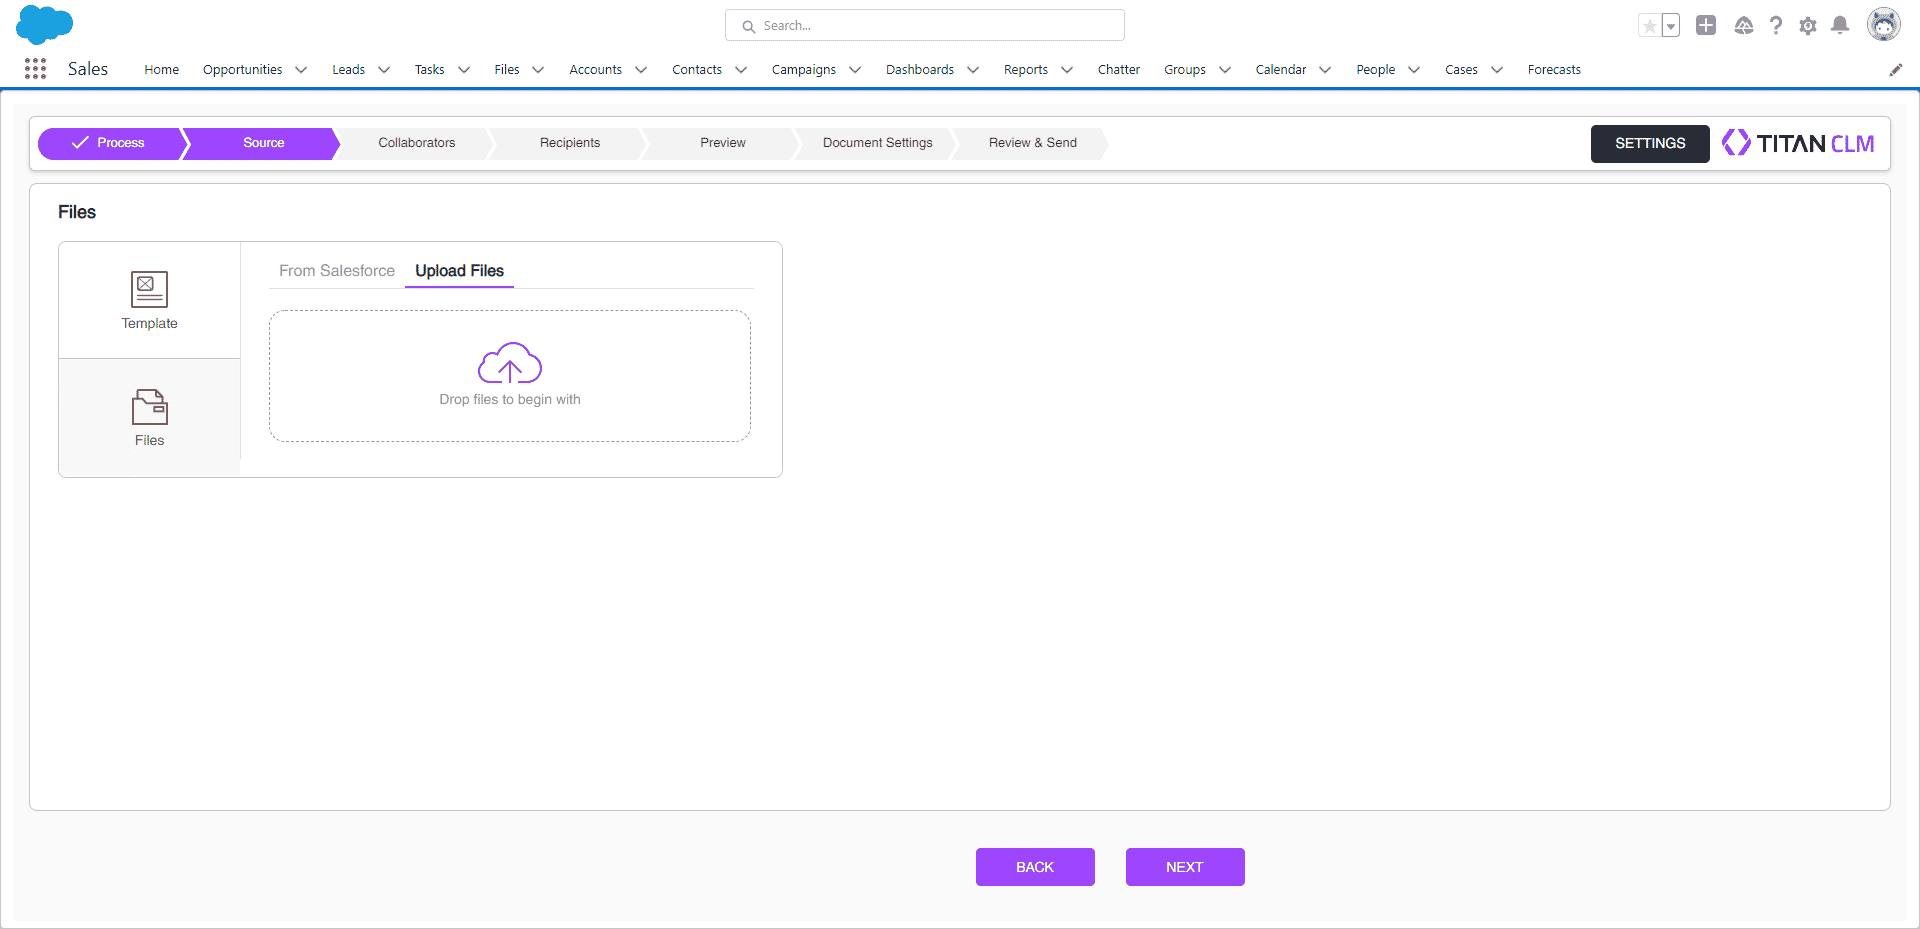 Source screen - Upload File option